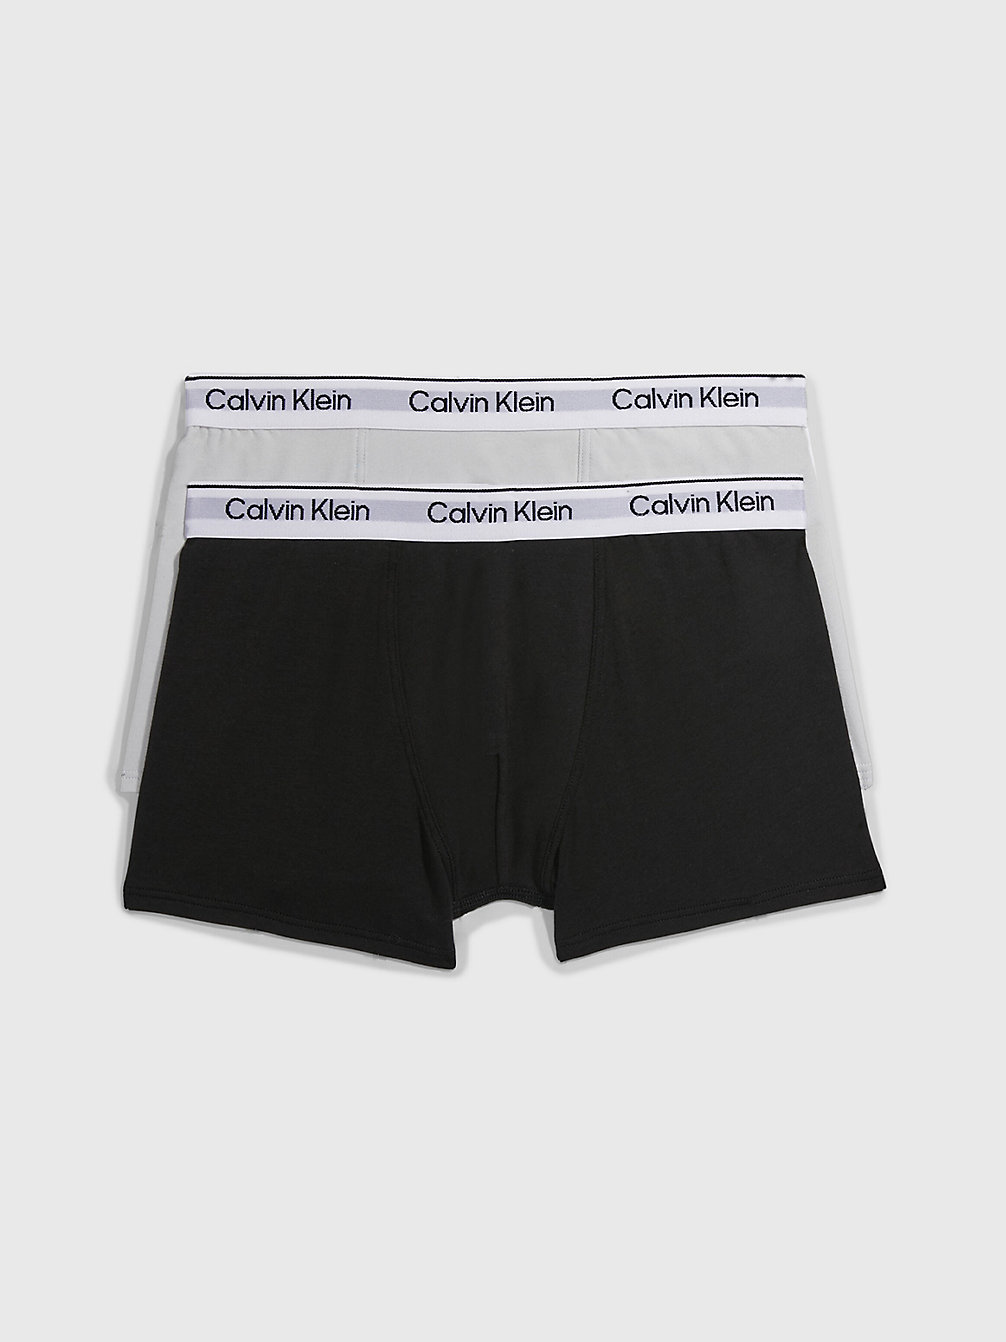 STONEGREY/PVHBLACK 2 Pack Boys Trunks - Modern Cotton undefined boys Calvin Klein